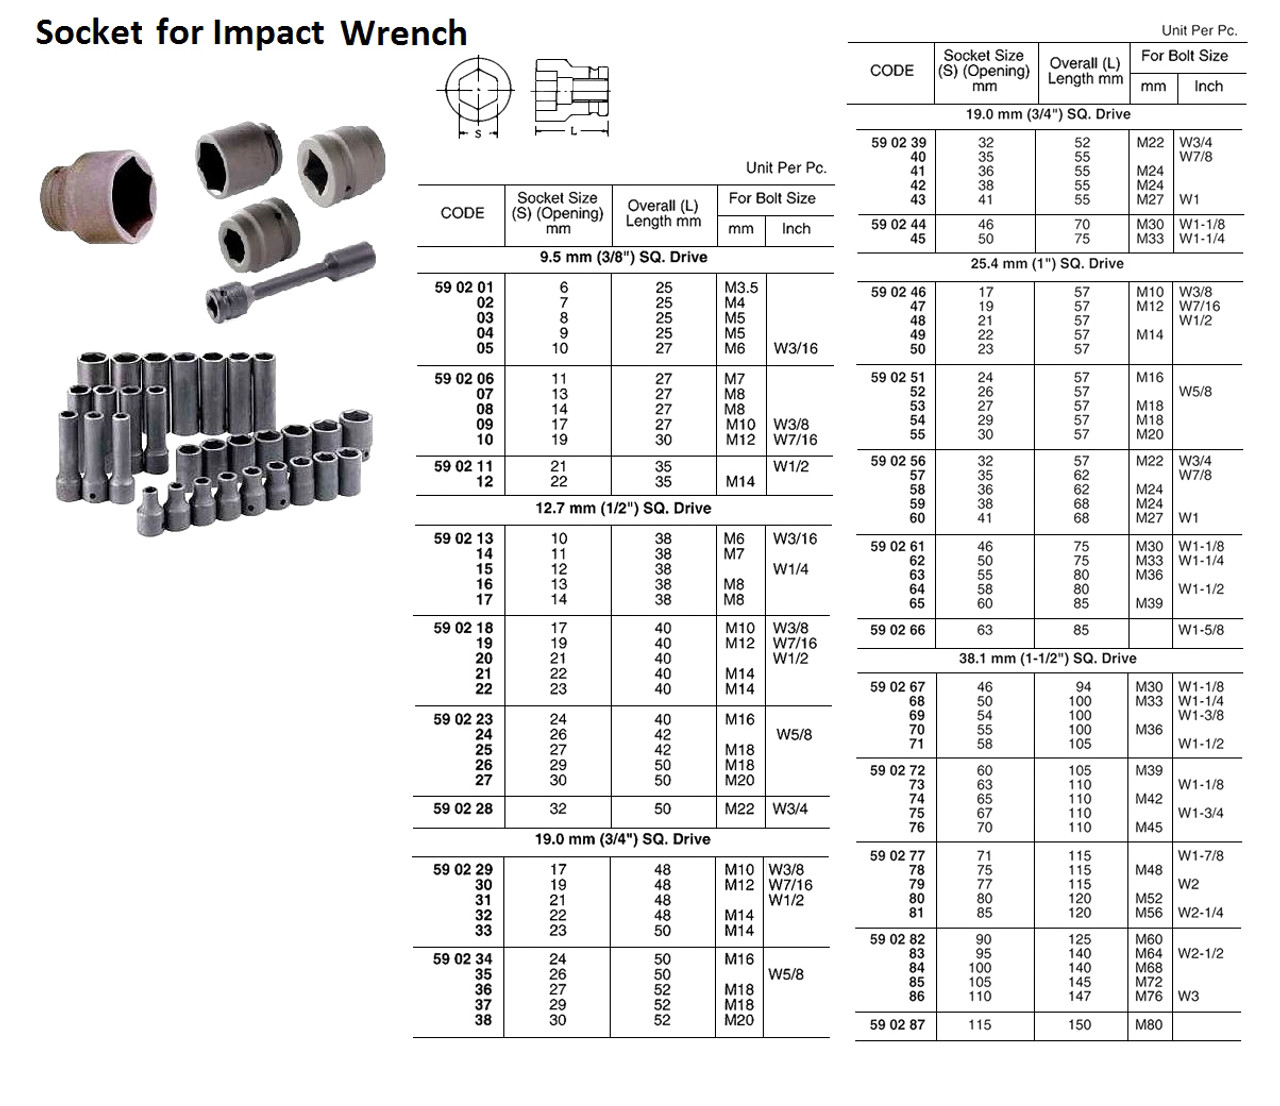 IMPA 590271 Heavy duty impact socket 1 1/2" square drive x 58mm